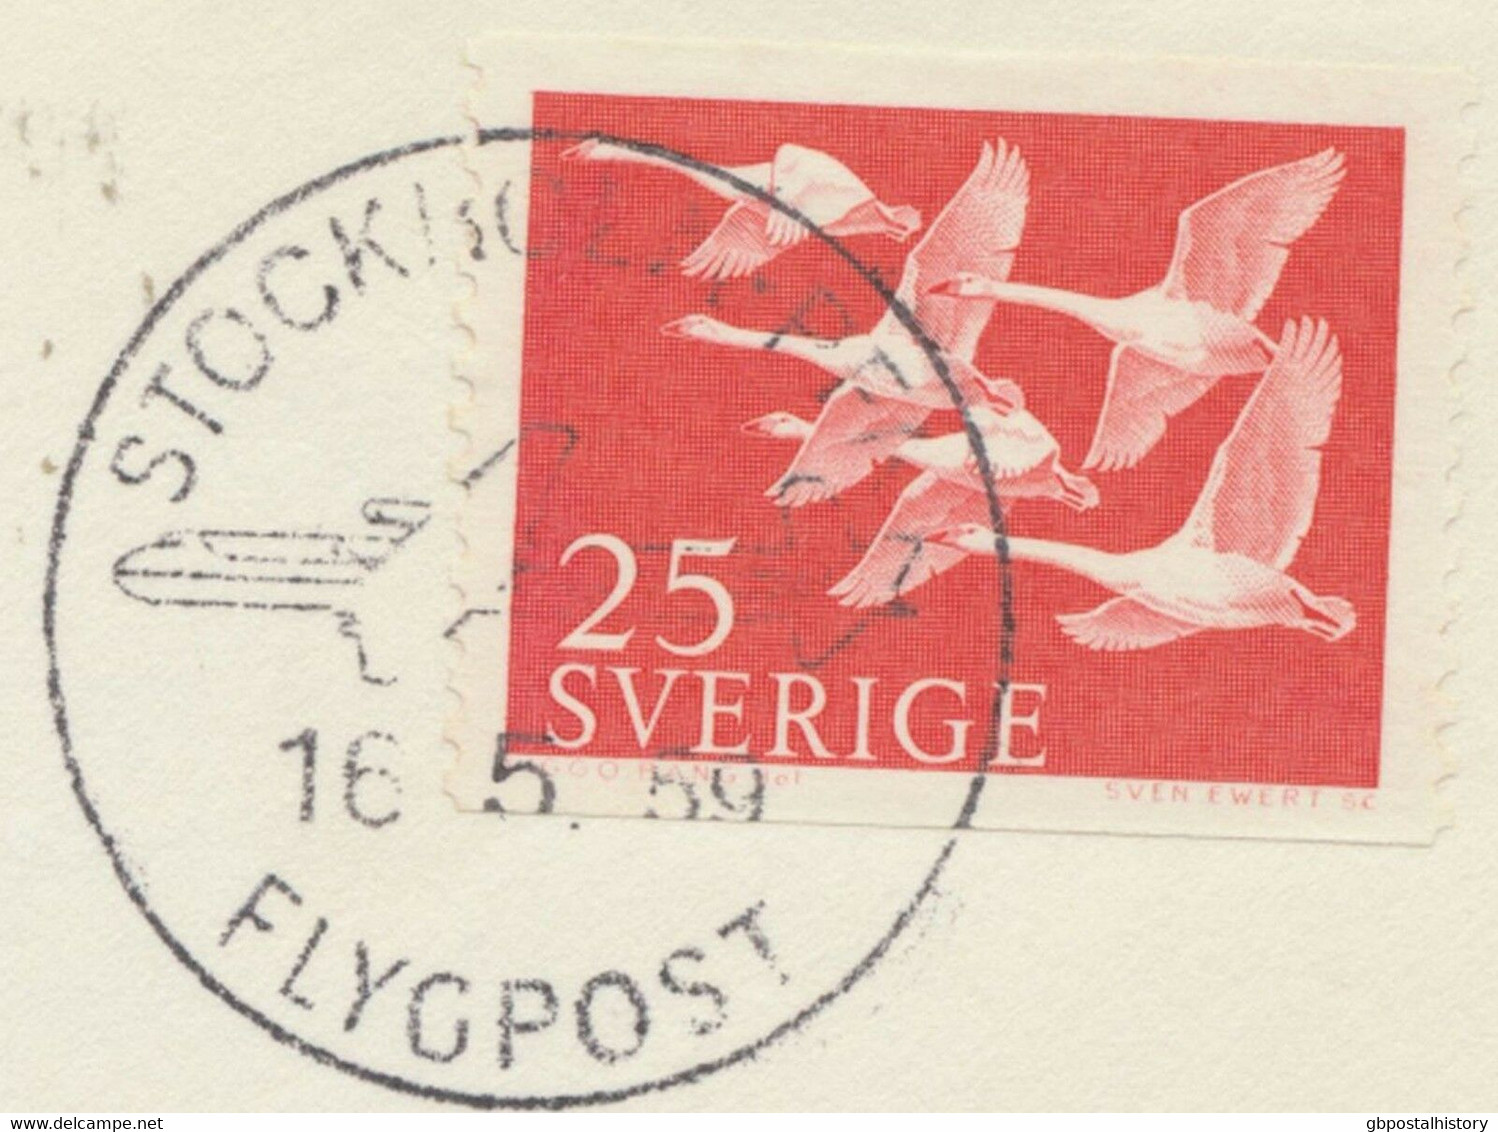 SWEDEN 1959, First Flight SAS First Caravelle Jet Flight "STOCKHOLM - MUNICH" - Covers & Documents